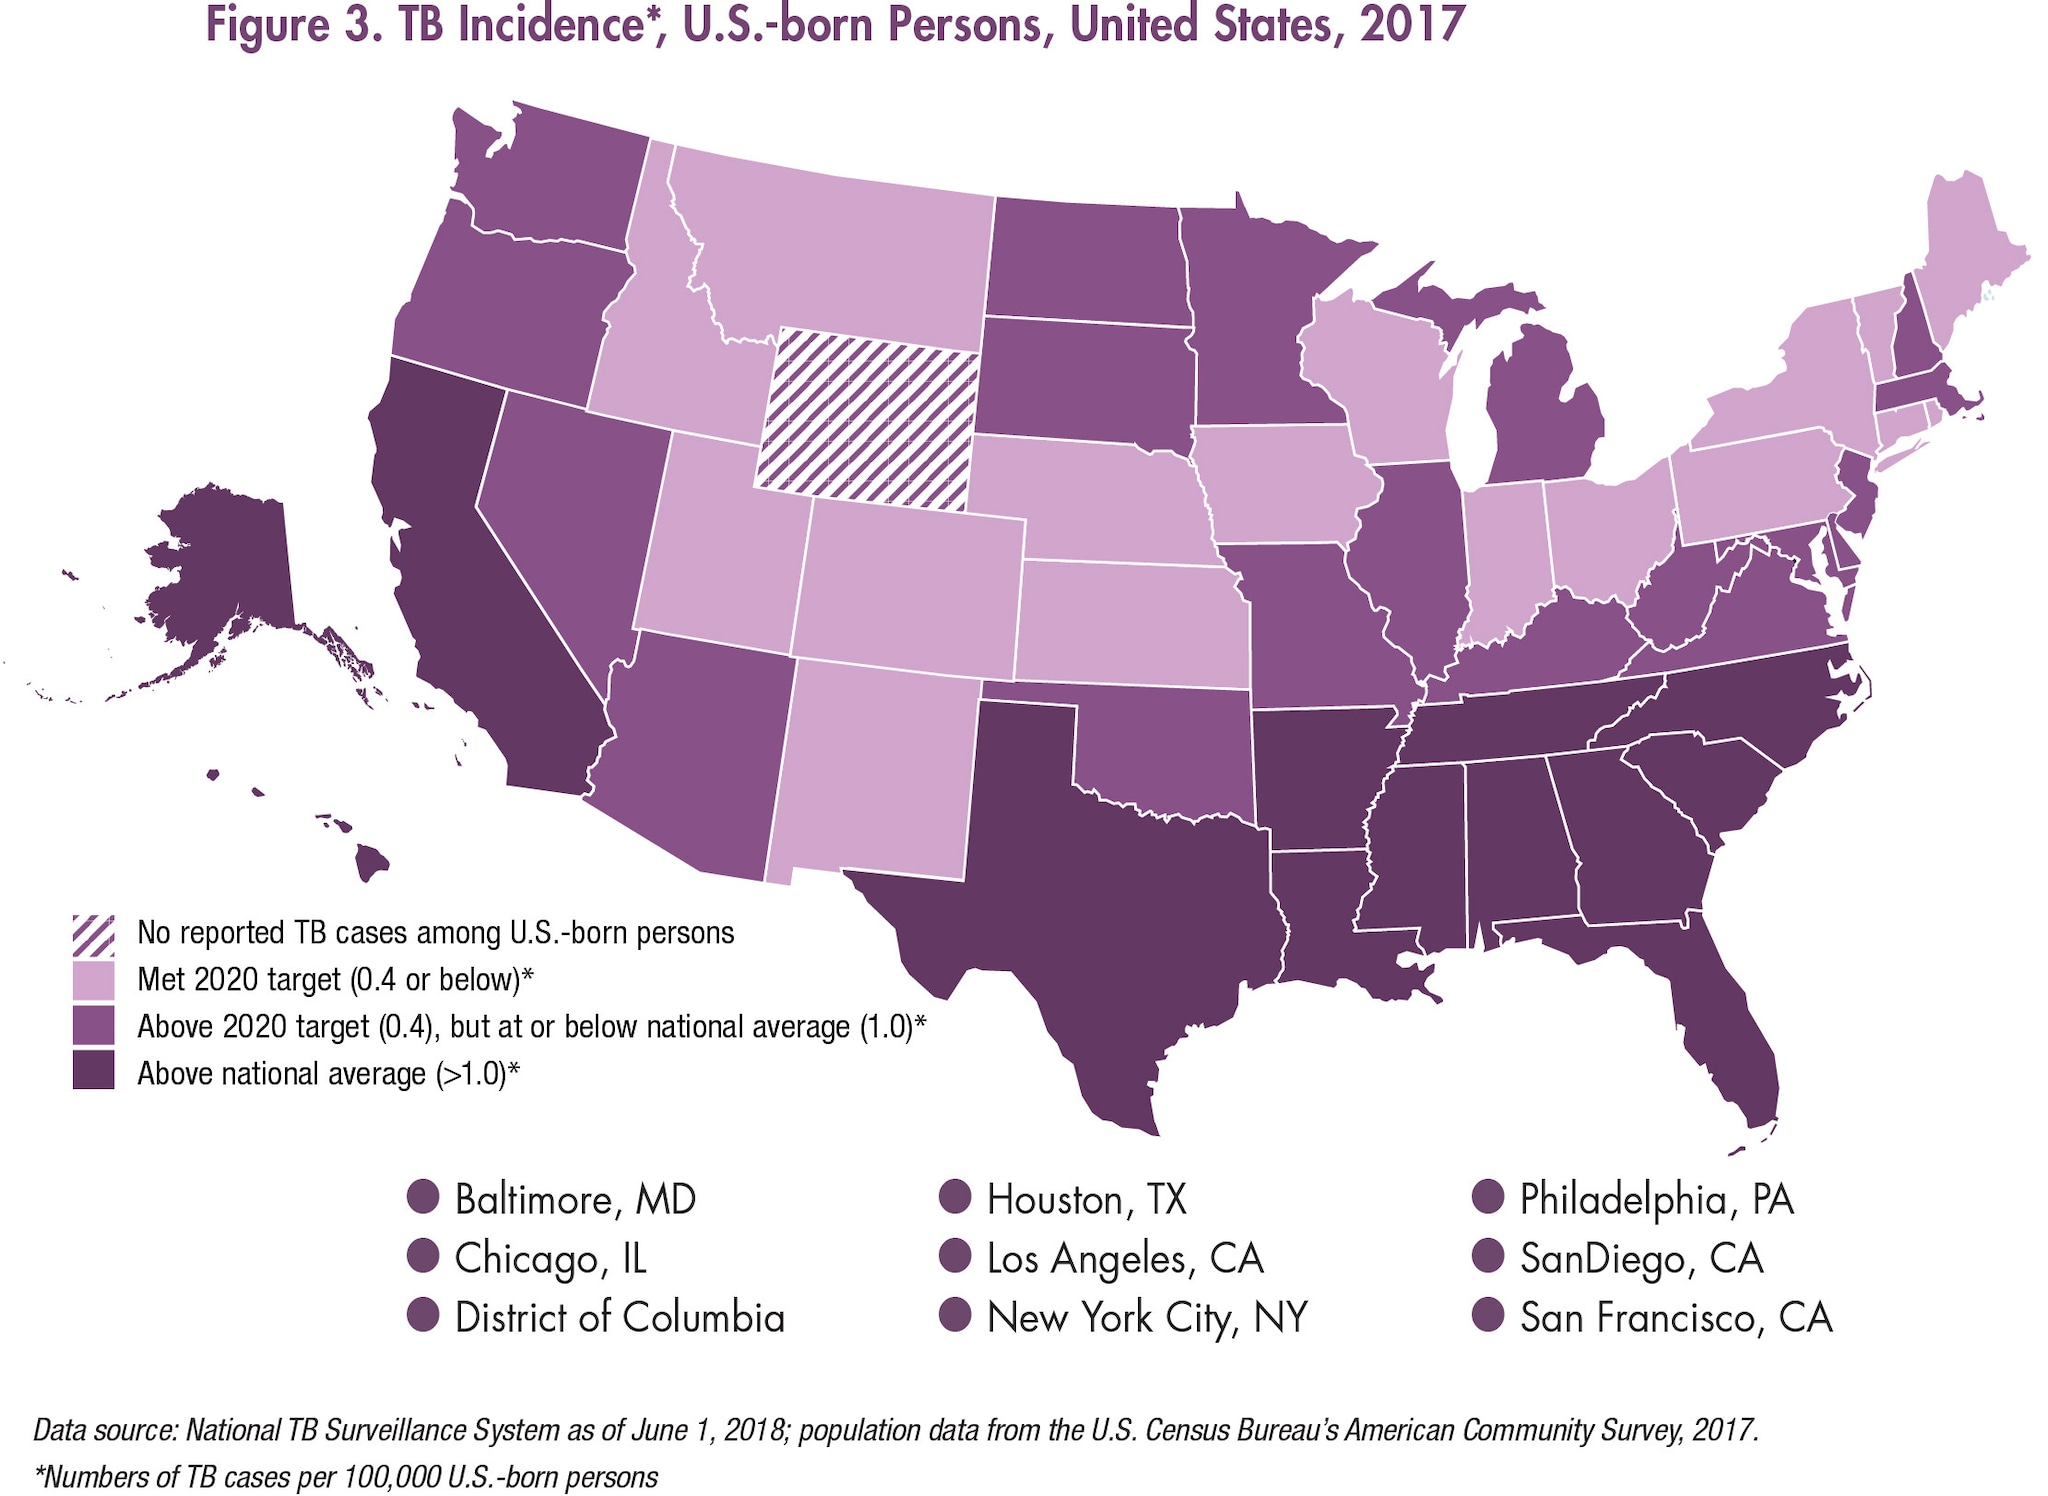 This map shows states and cities color coded into one of 3 categories based on TB incidence among U.S.-born persons: those that were at or below the 2020 target of 0.4 TB cases/100,000 U.S.-born persons (Rhode Island, Idaho, Maine, Vermont, Nebraska, Wisconsin, Utah, Iowa, Montana, New York, Pennsylvania, Kansas, New Mexico, Connecticut, Ohio, Colorado, and Indiana), those that were above the 2020 target of 0.4, but were at or below the national average of 1.0 (New Hampshire, Massachusetts, Virginia, West Virginia, Oregon, Michigan, Minnesota, Illinois, Washington, Missouri, Nevada, Maryland, New Jersey, Kentucky, Oklahoma, Arizona, South Dakota, North Dakota, North Carolina, and Delaware) and those that were above the national average of 1.0 (Tennessee, California, Los Angeles, Florida, Hawaii, San Francisco, South Carolina, Georgia, Mississippi, New York City, Texas, Philadelphia, Arkansas, Chicago, Louisiana, District of Columbia, Alabama, Baltimore, San Diego, Houston, and Alaska).  Wyoming did not report any TB cases among U.S.-born persons.